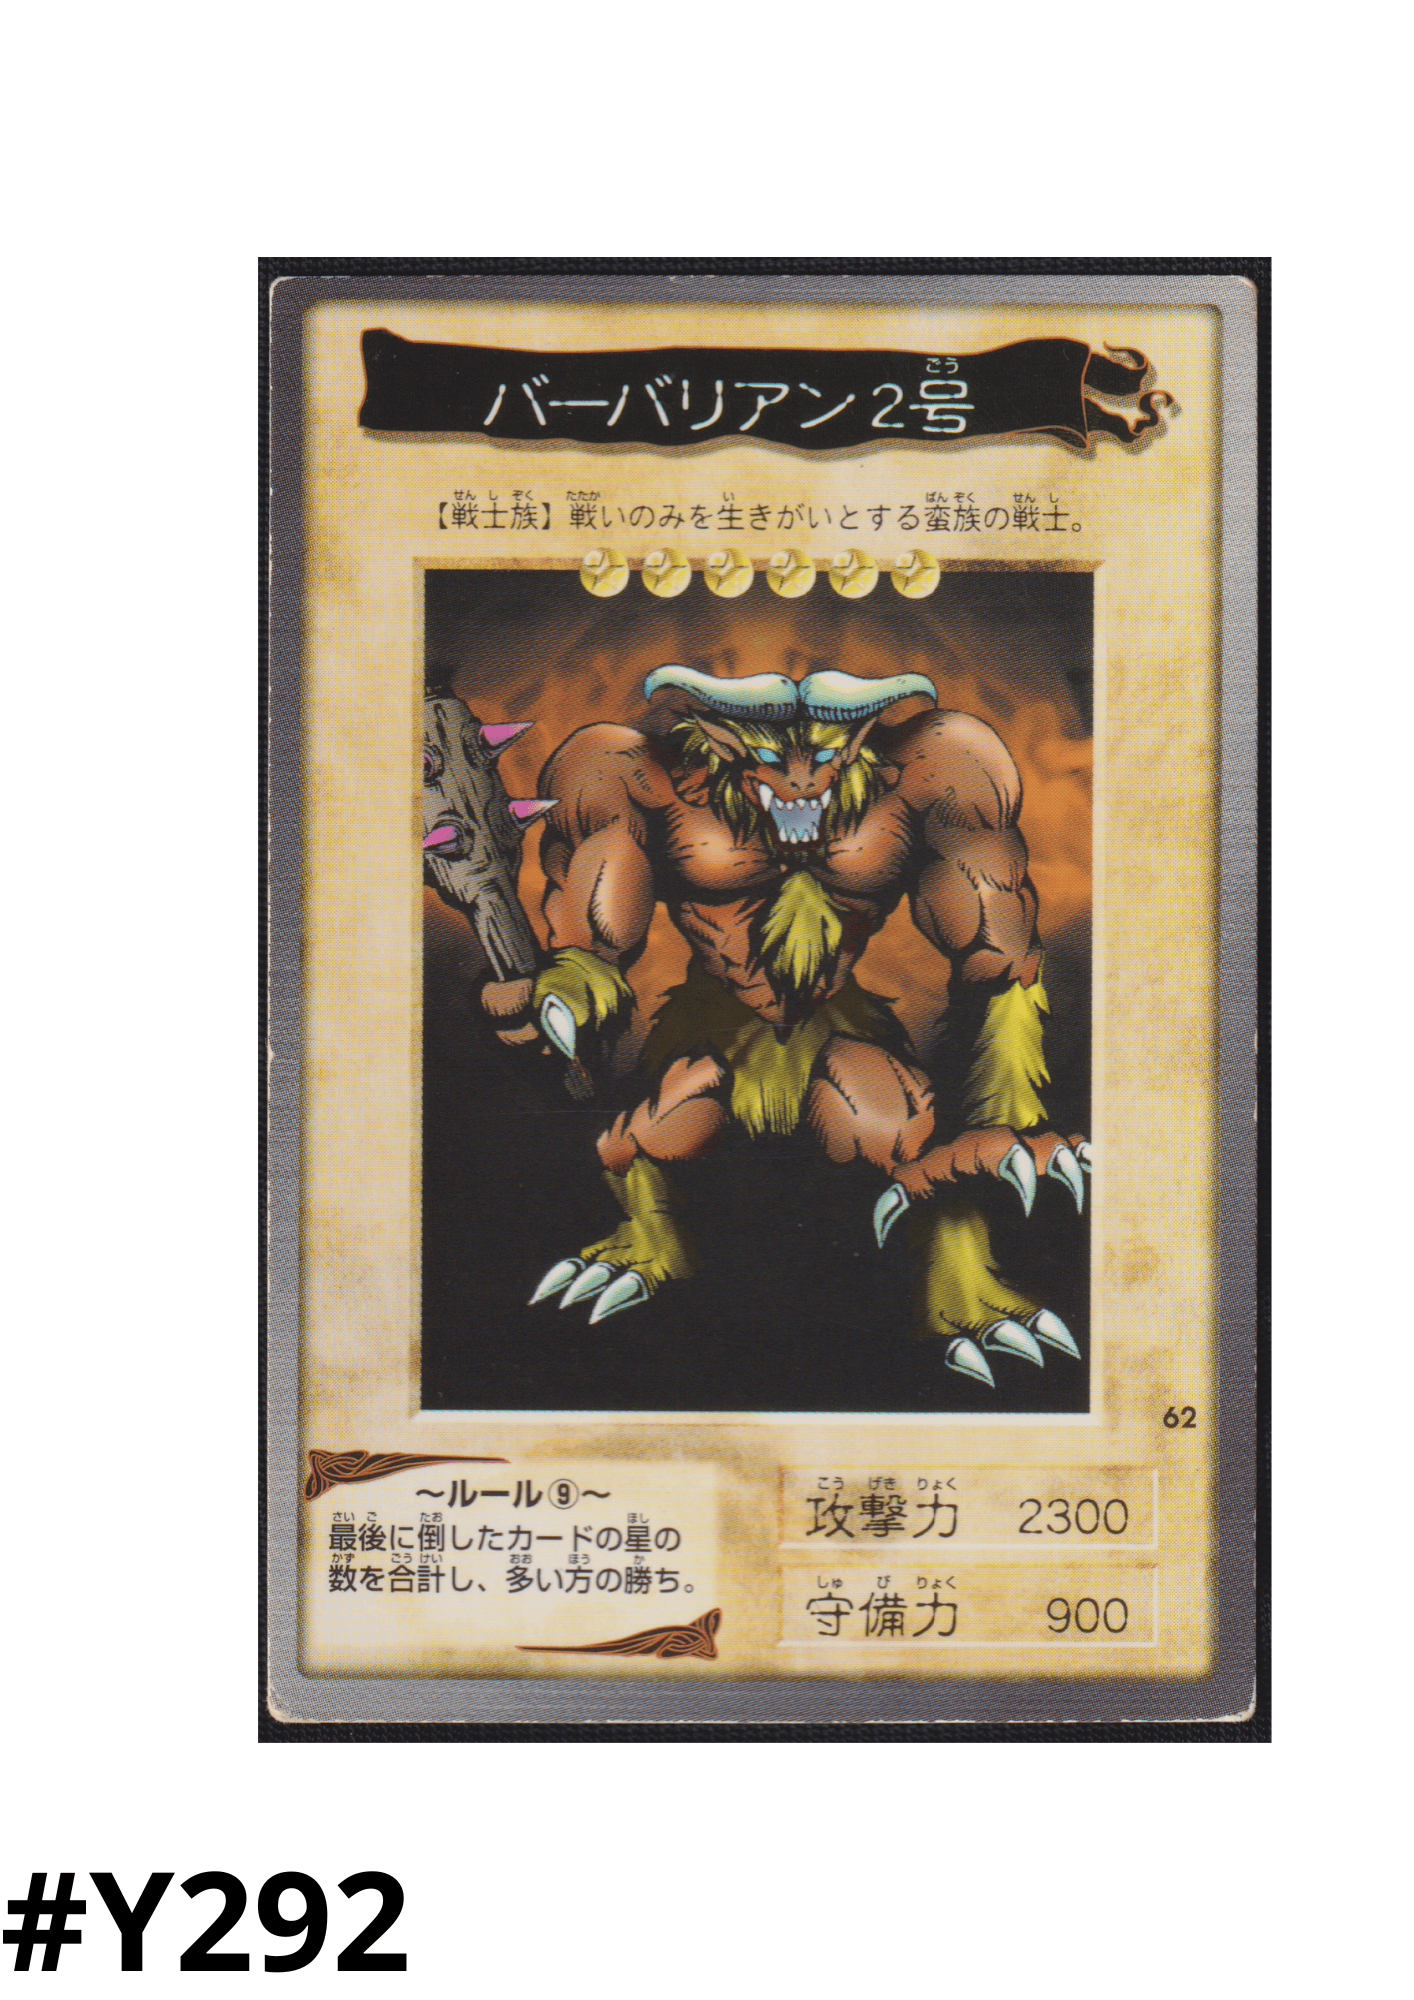 Yu-Gi-Oh! | Bandai Card No.62 | Swamp Battleguard ChitoroShop